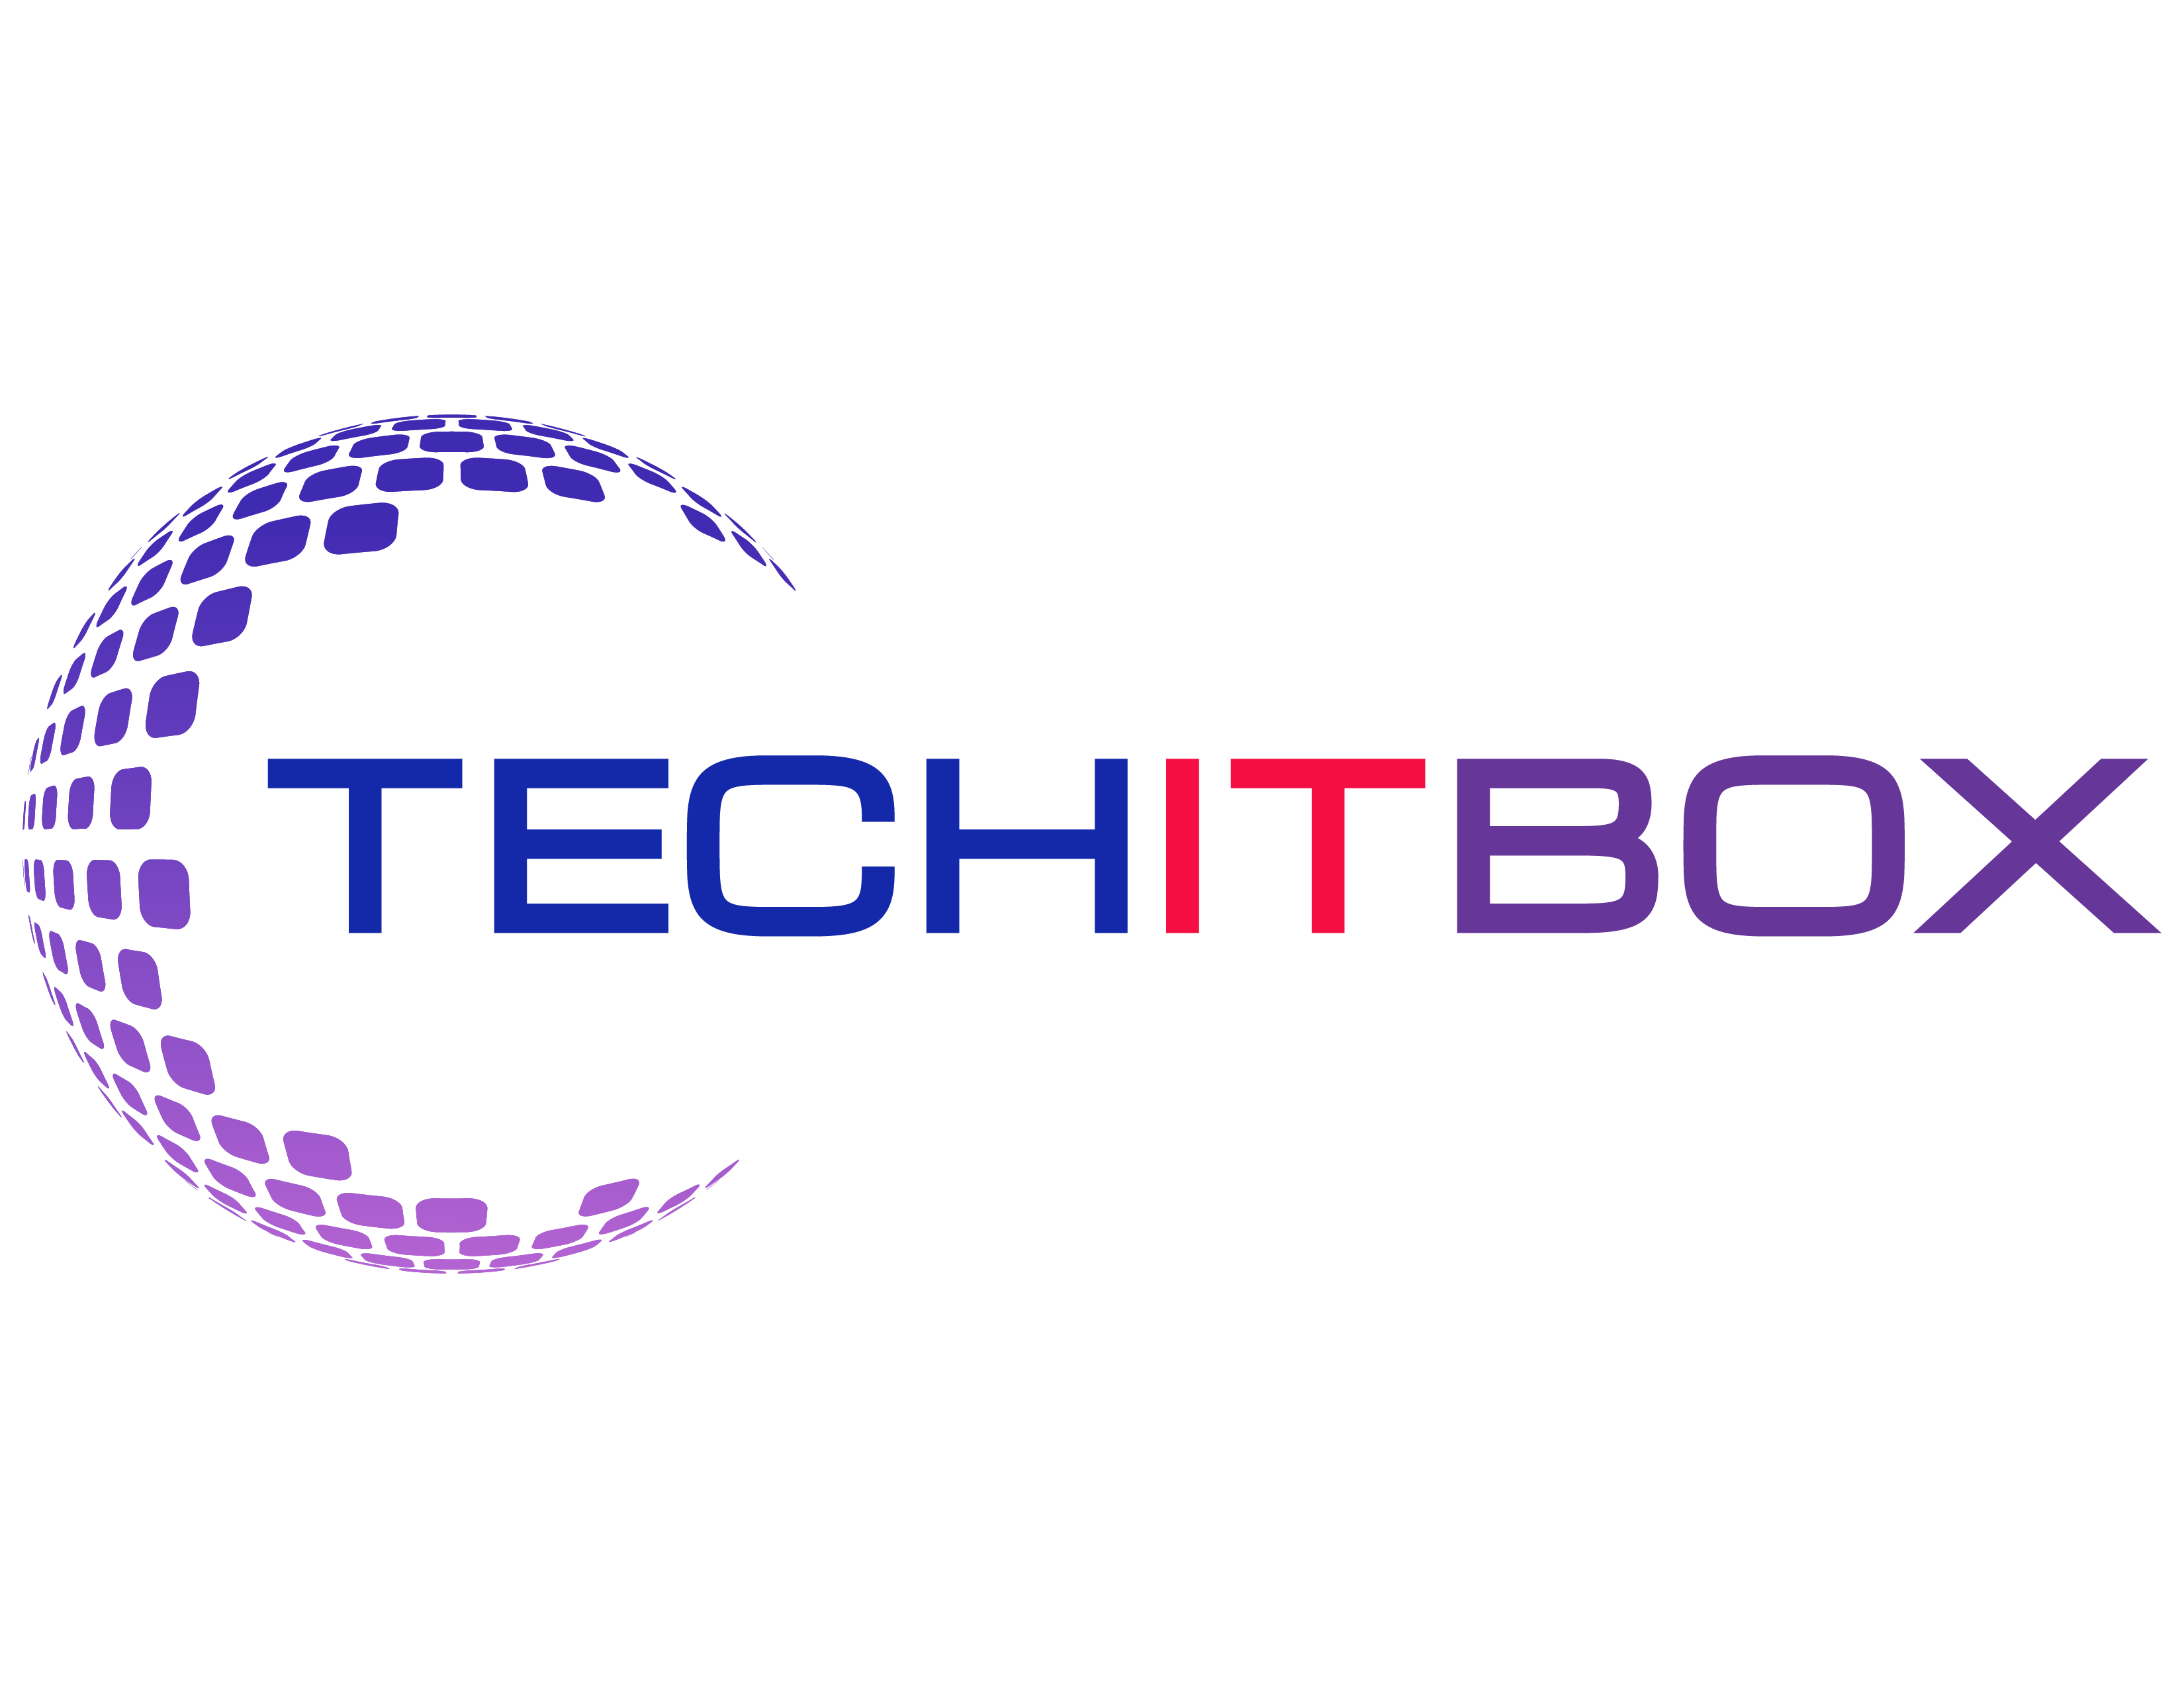 techitbox.com